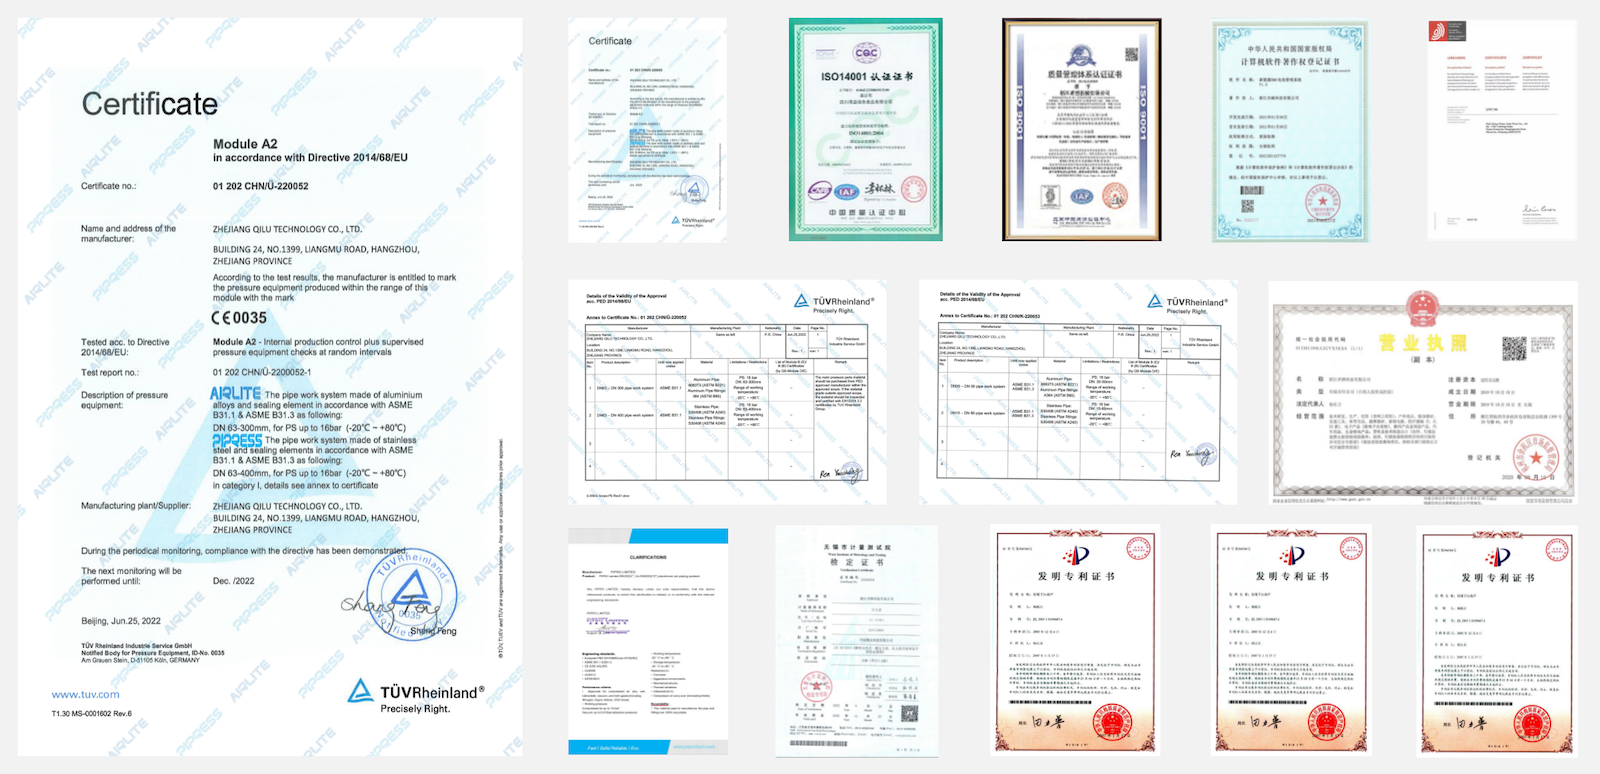 pipress-airlite-certificates